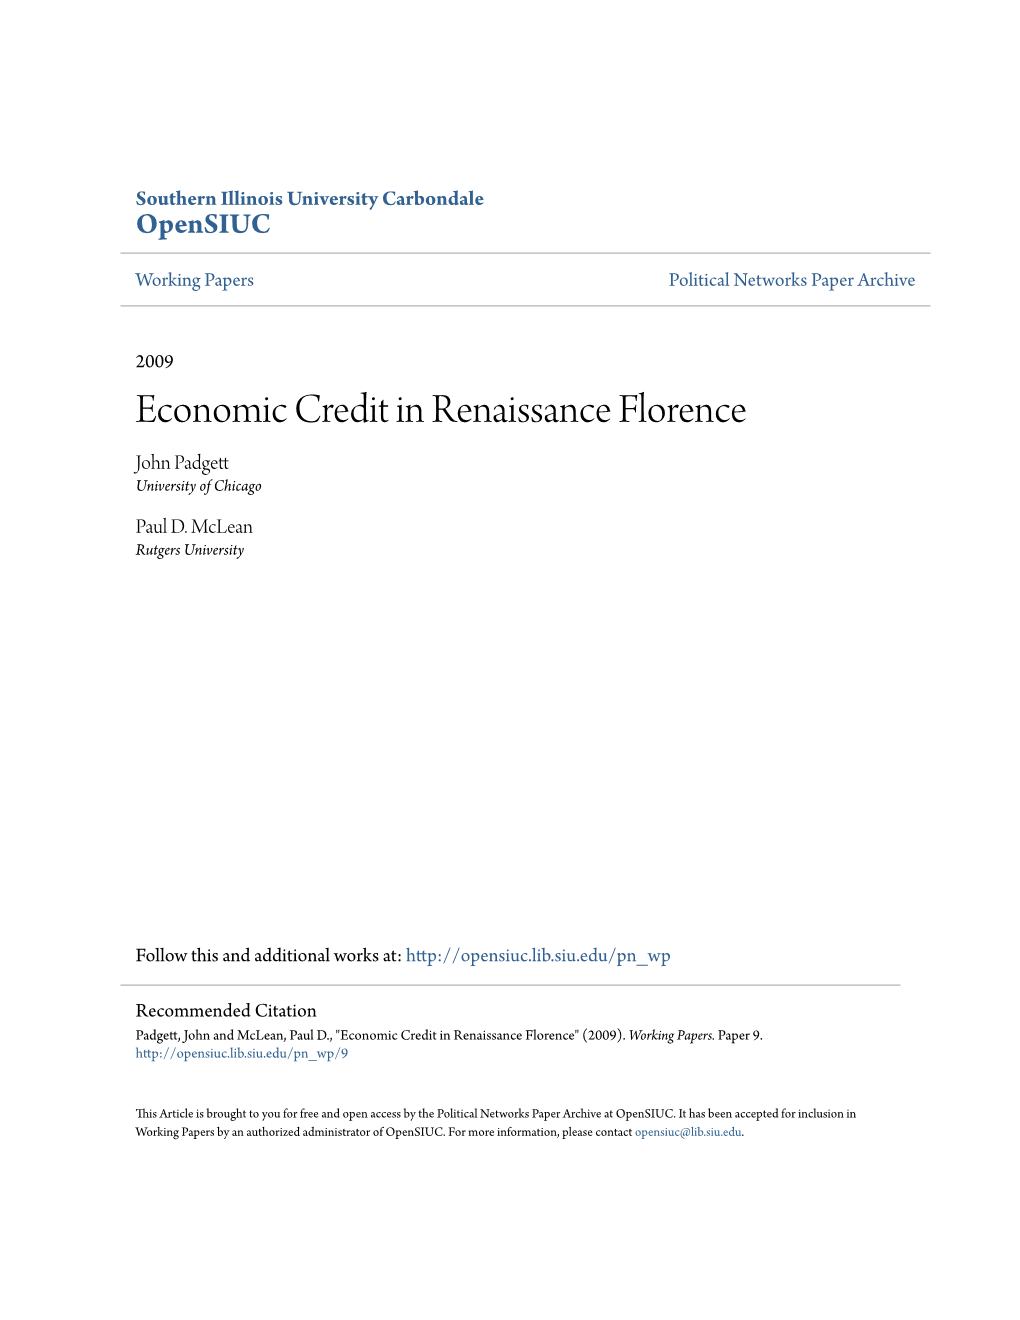 Economic Credit in Renaissance Florence John Padgett University of Chicago